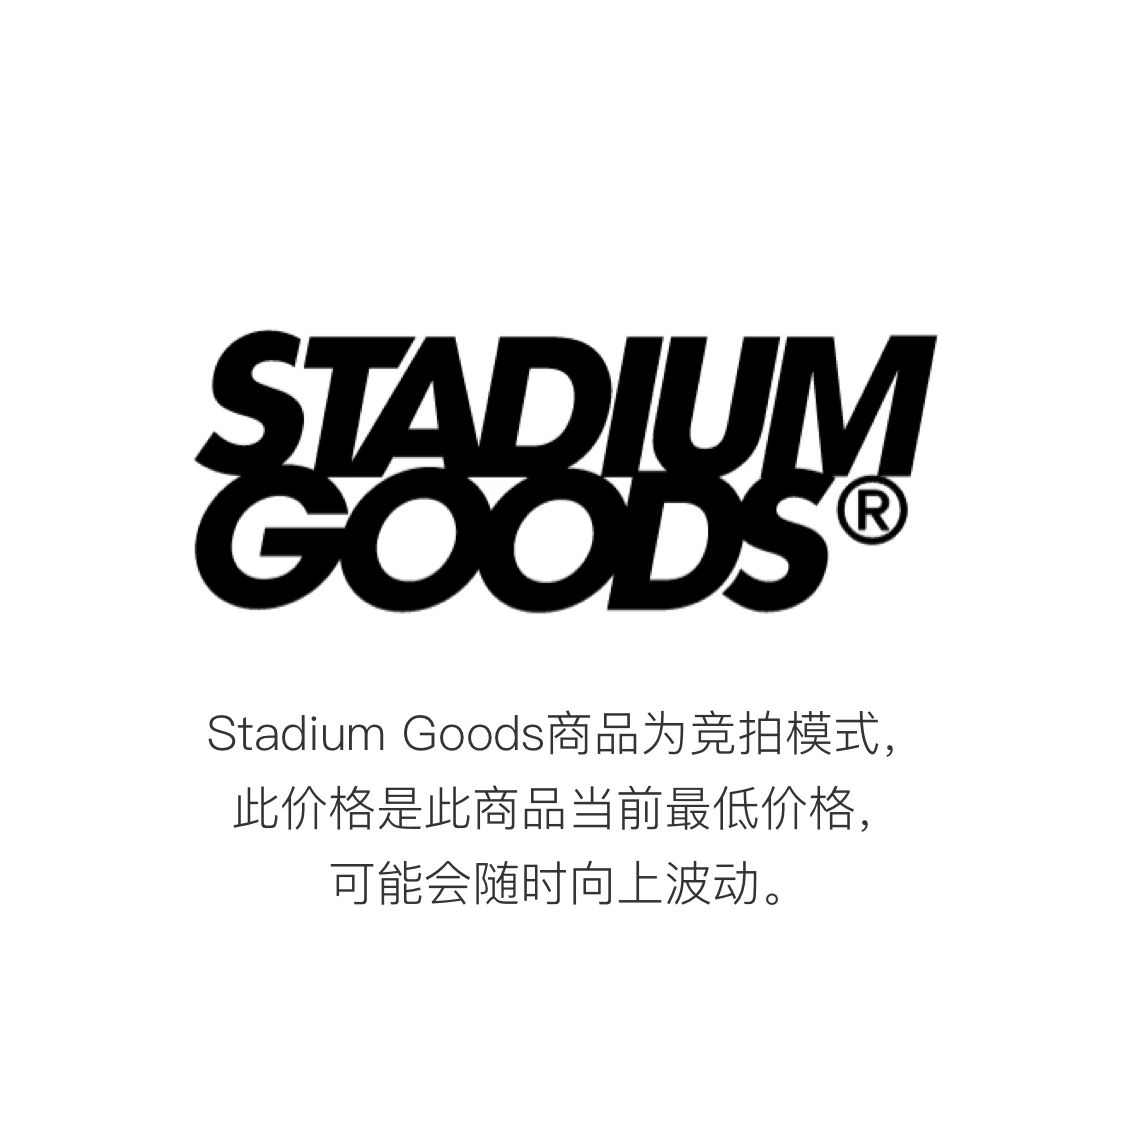 Nike Air Force 1 - Stadium Goods